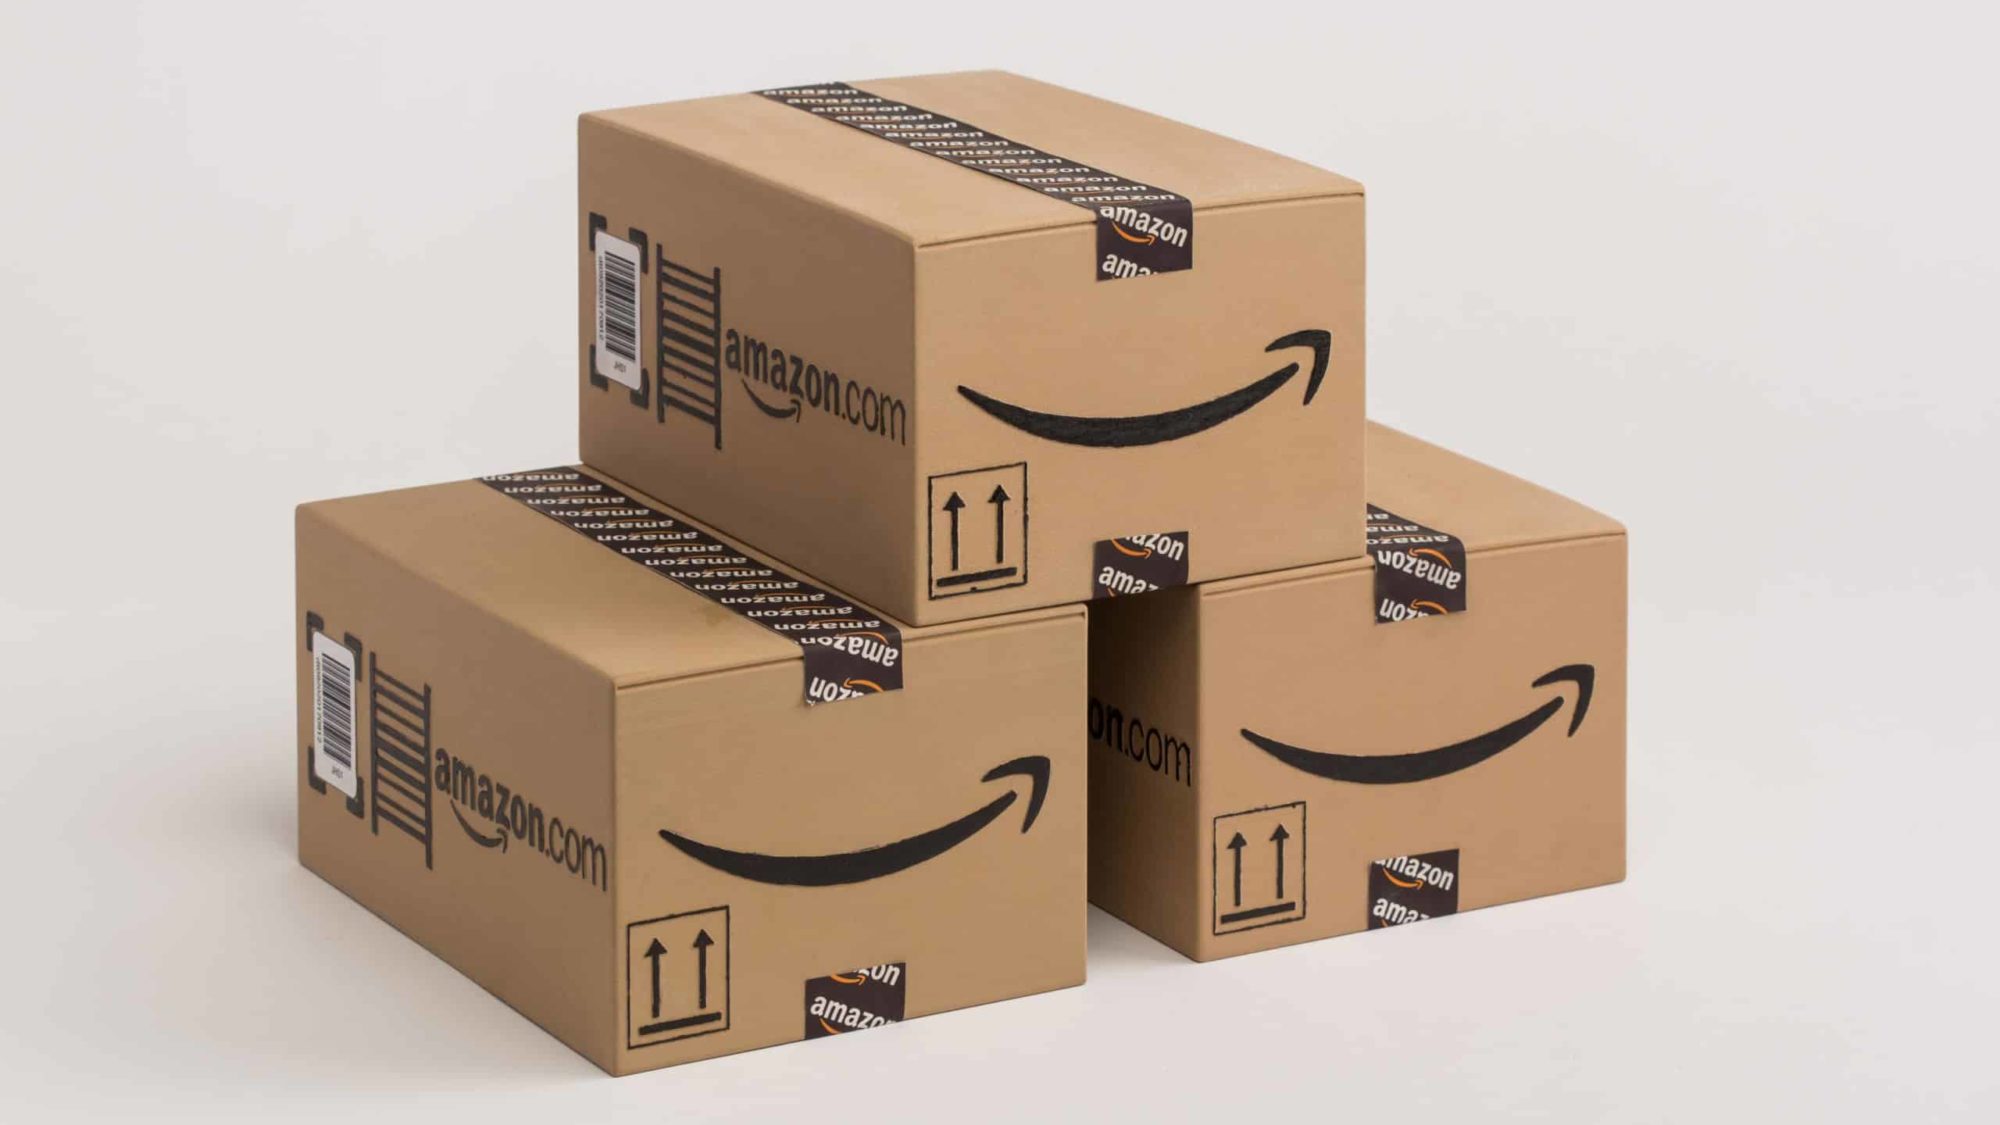 Amazon staff bribery under investigation